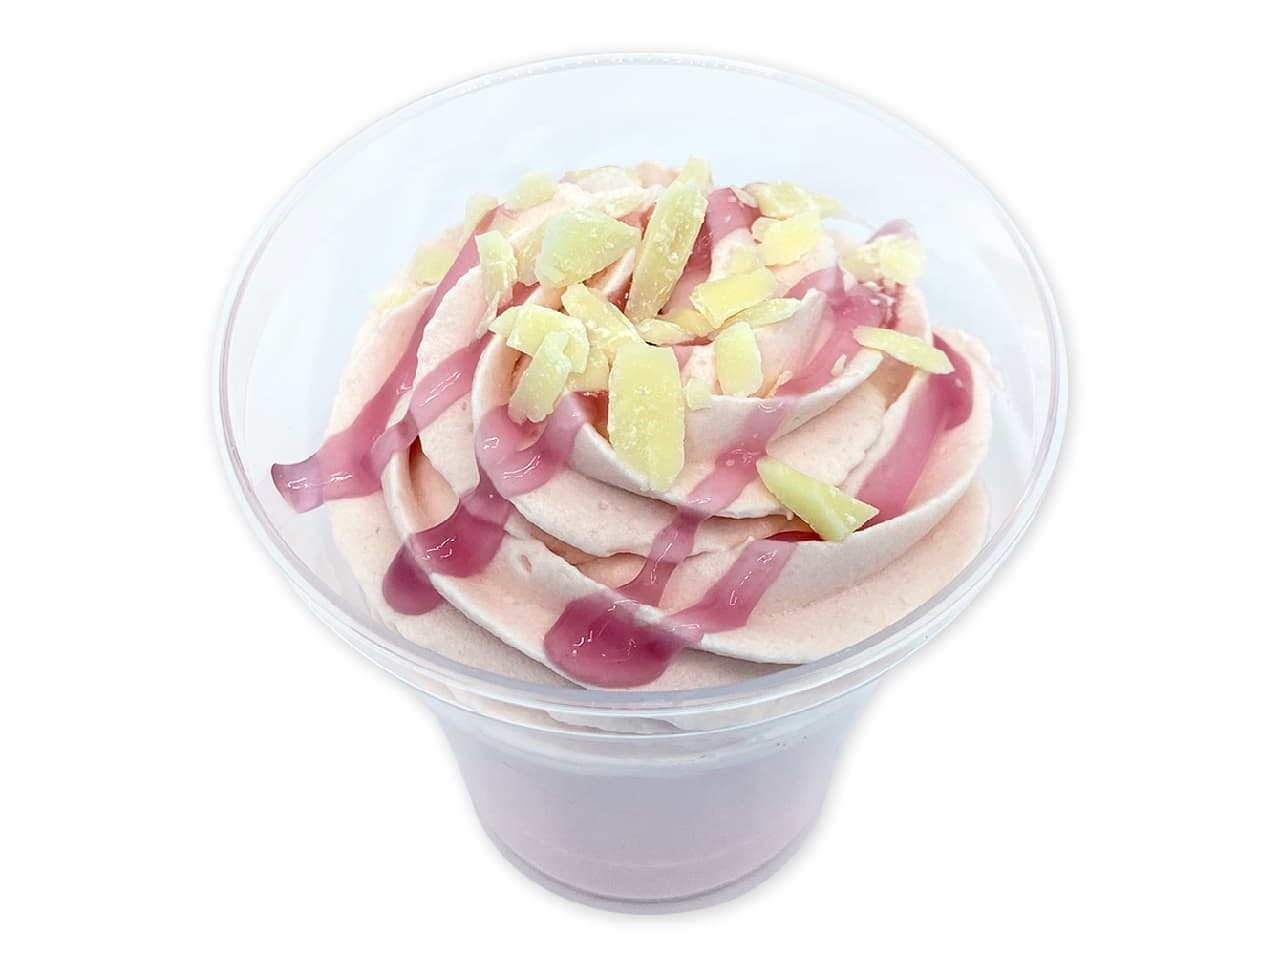 7-ELEVEN "Sakura Milk Pudding